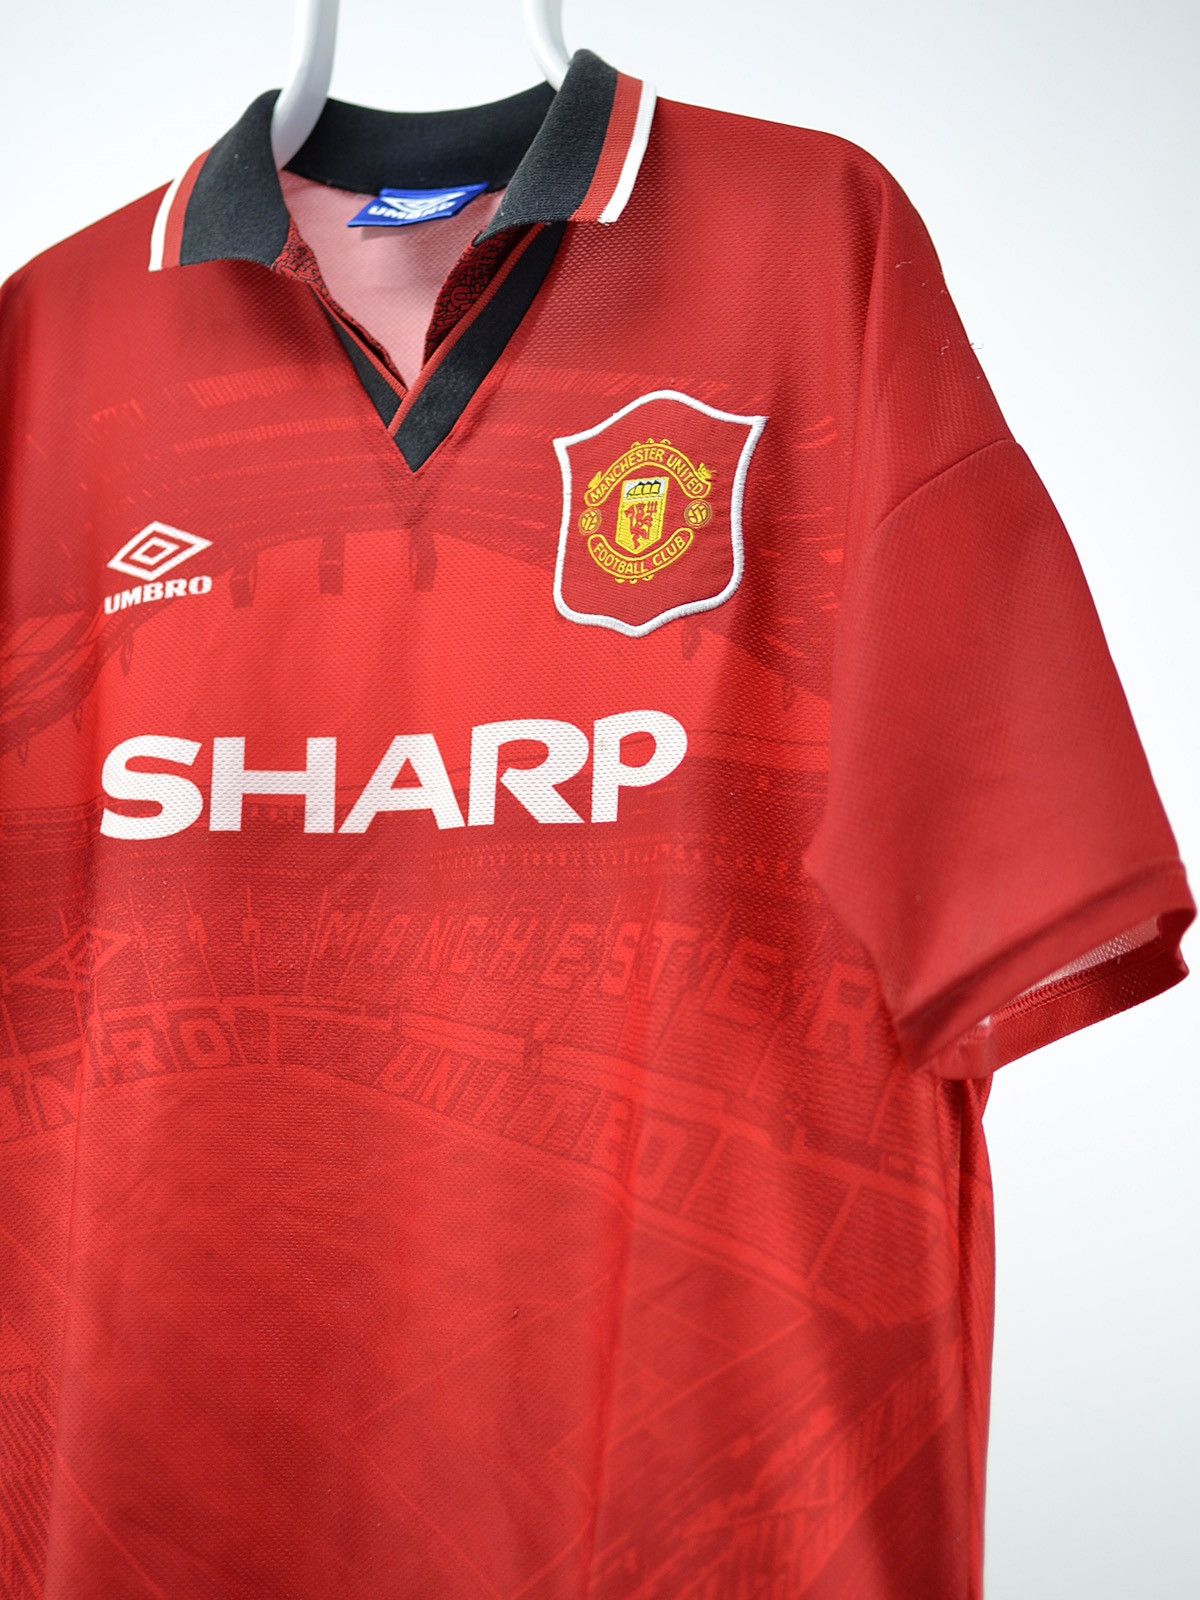 Umbro Vintage Manchester United Umbro Sharp Jersey Shirt 94/95 L Size US L / EU 52-54 / 3 - 3 Thumbnail